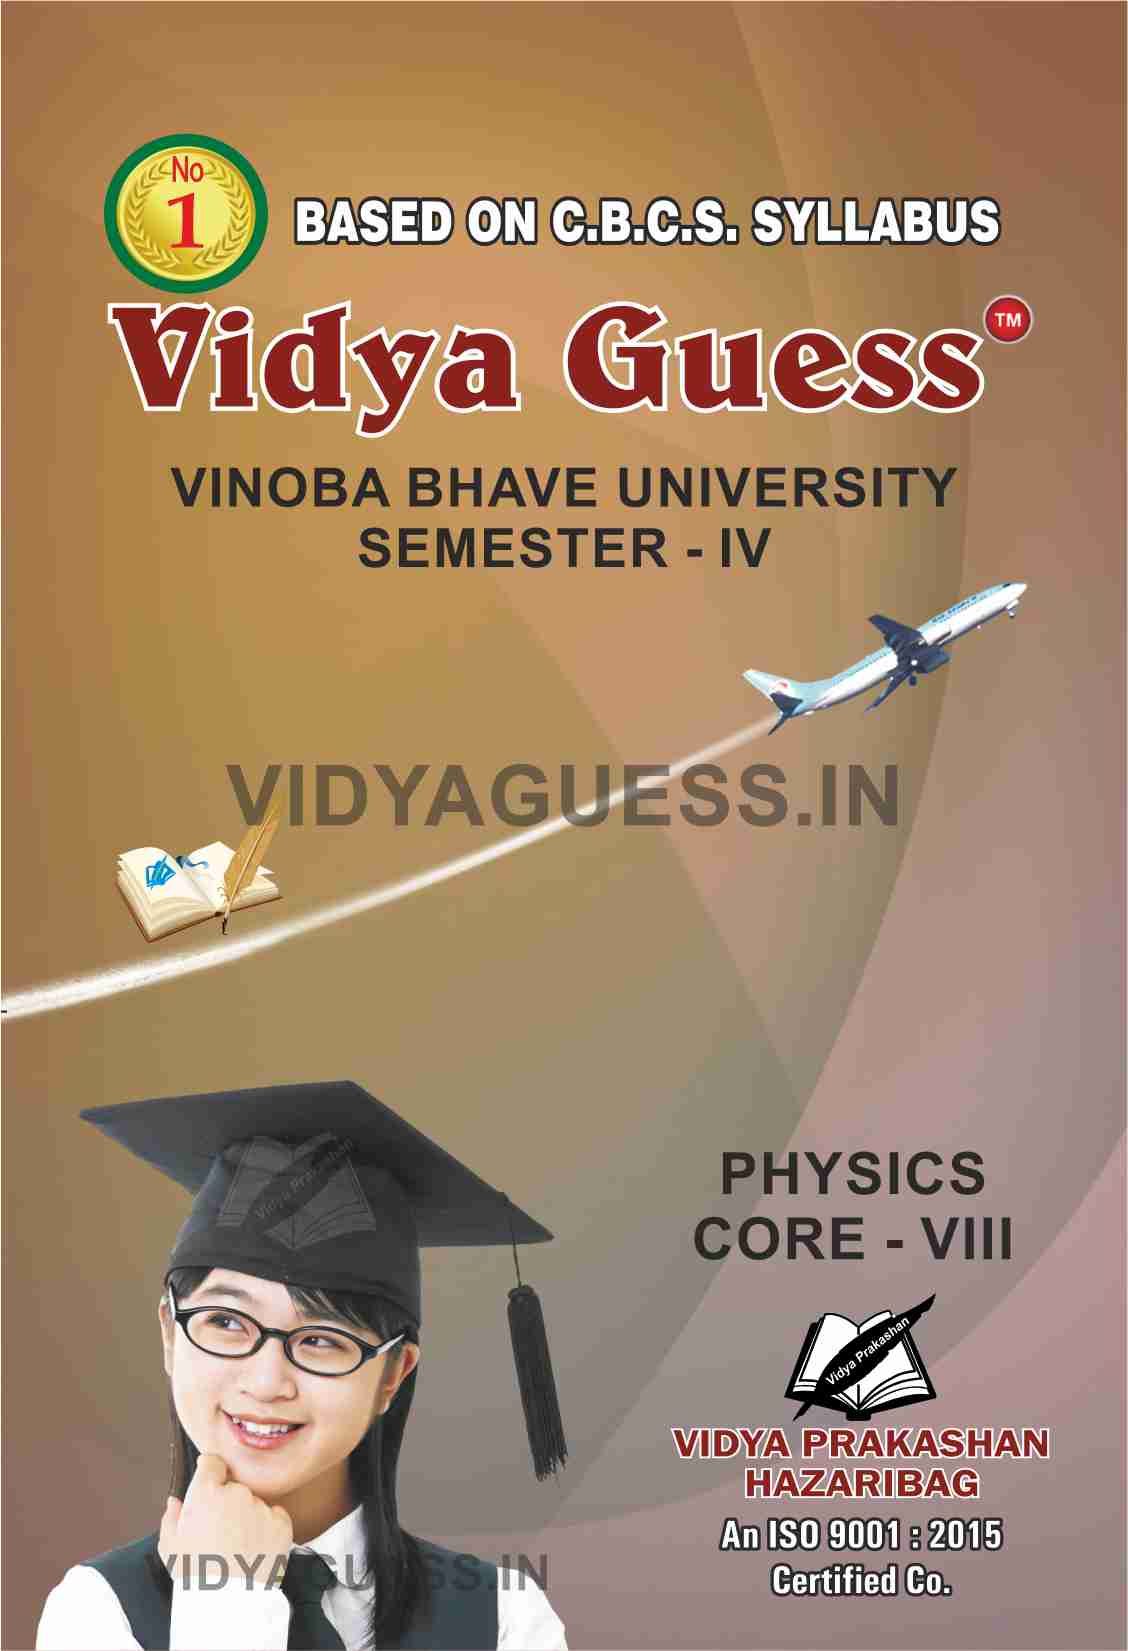 Physics Core - VIII For V.B.U SEMESTER - IV (SCIENCE)